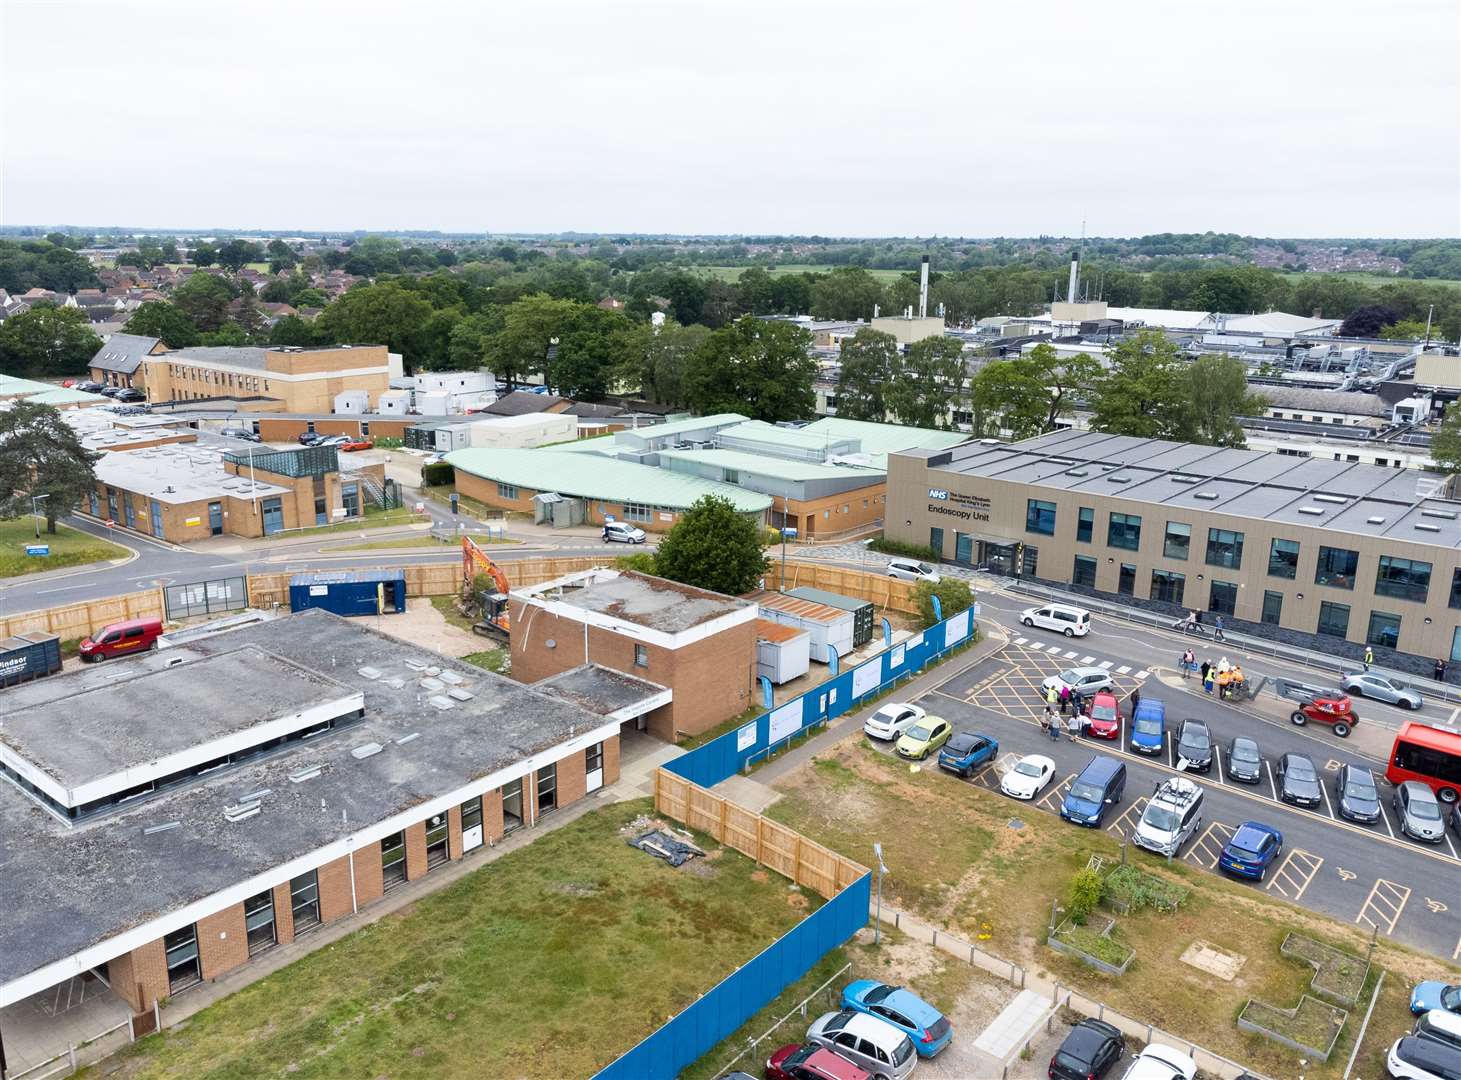 The Queen Elizabeth Hospital site